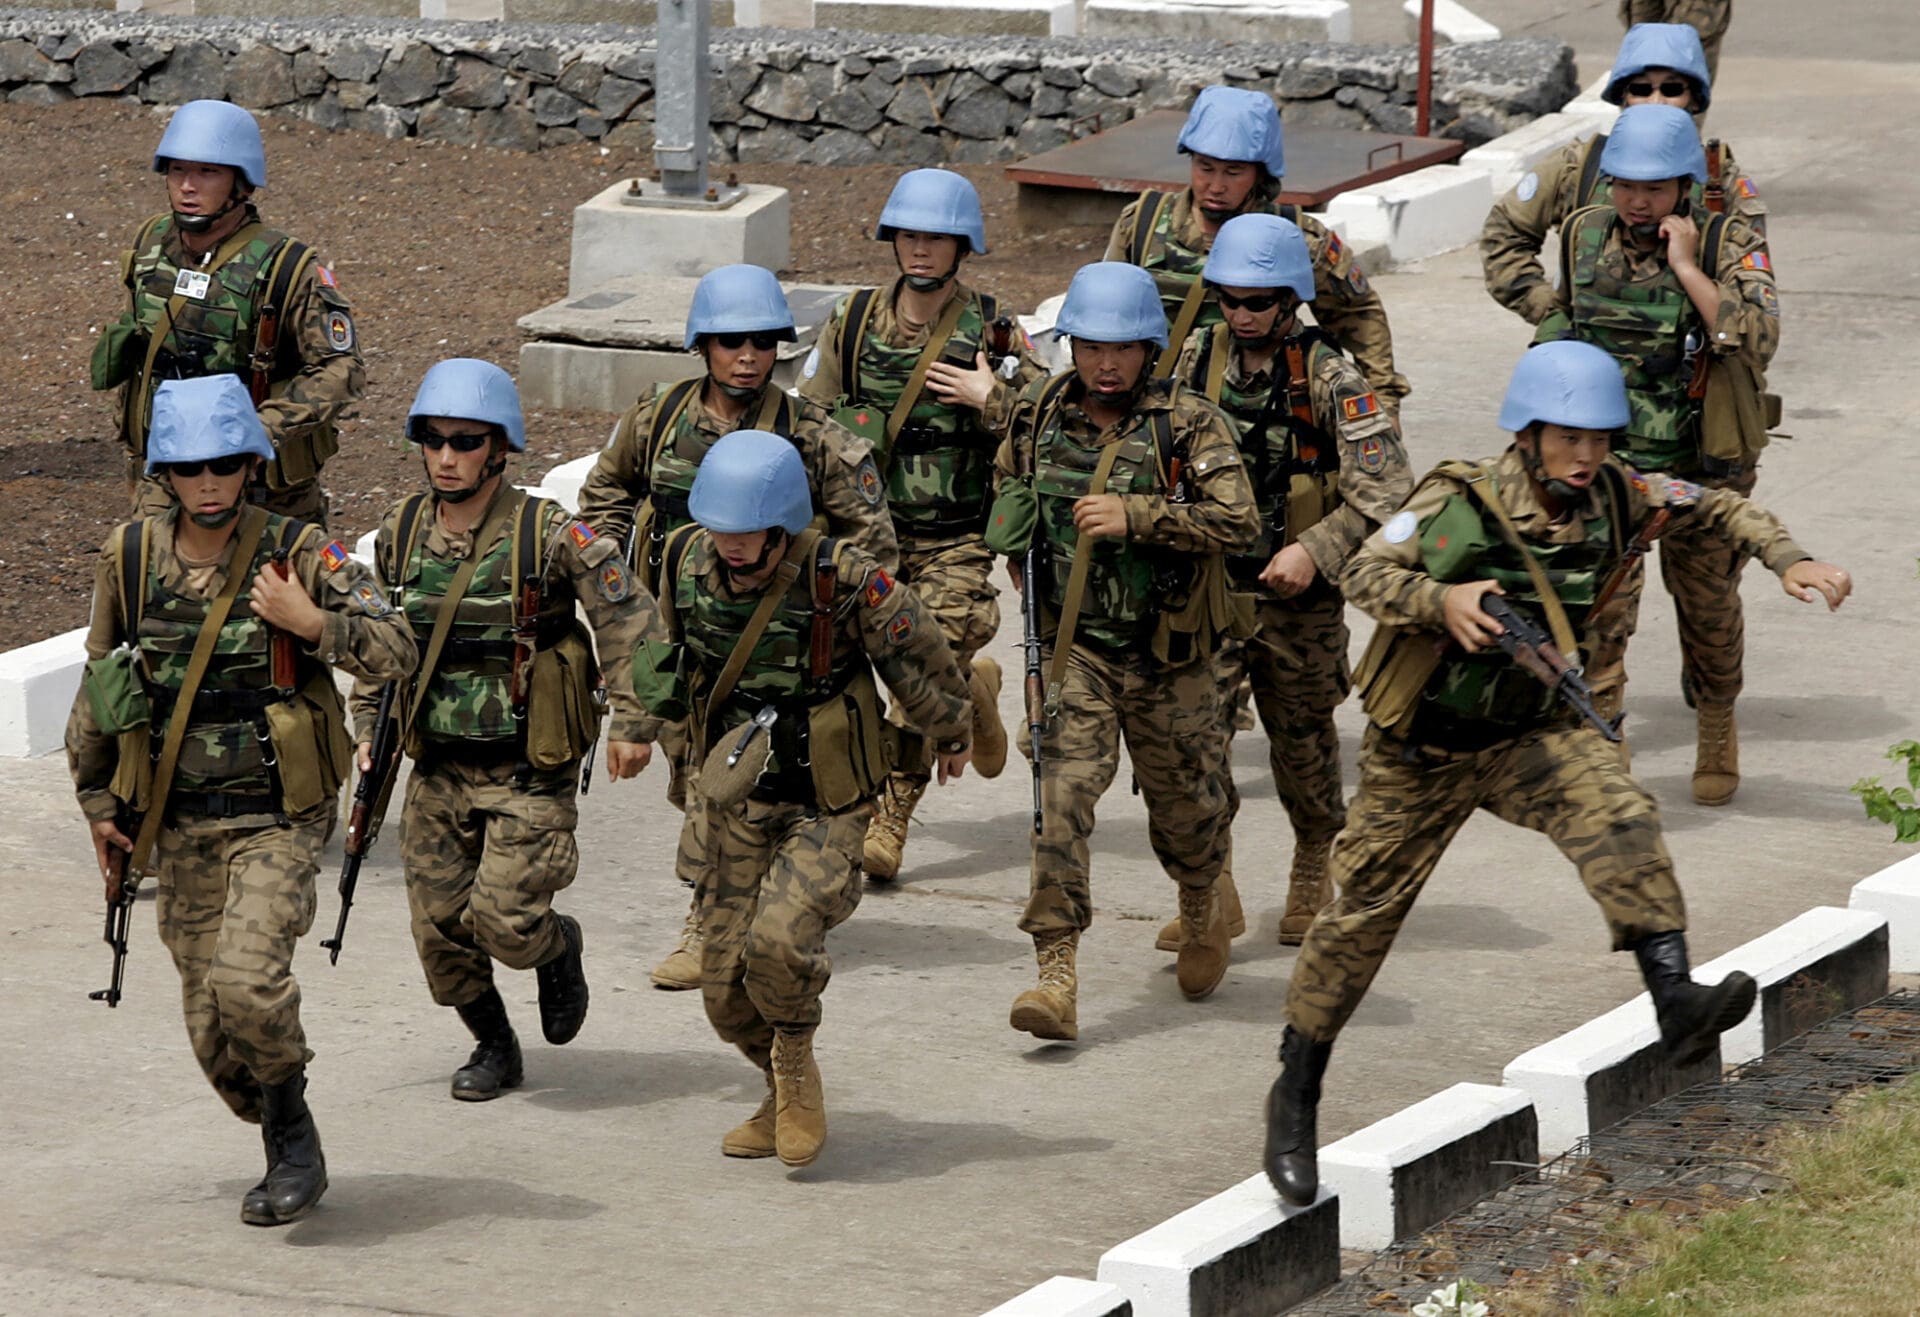 UN troops blue helmet